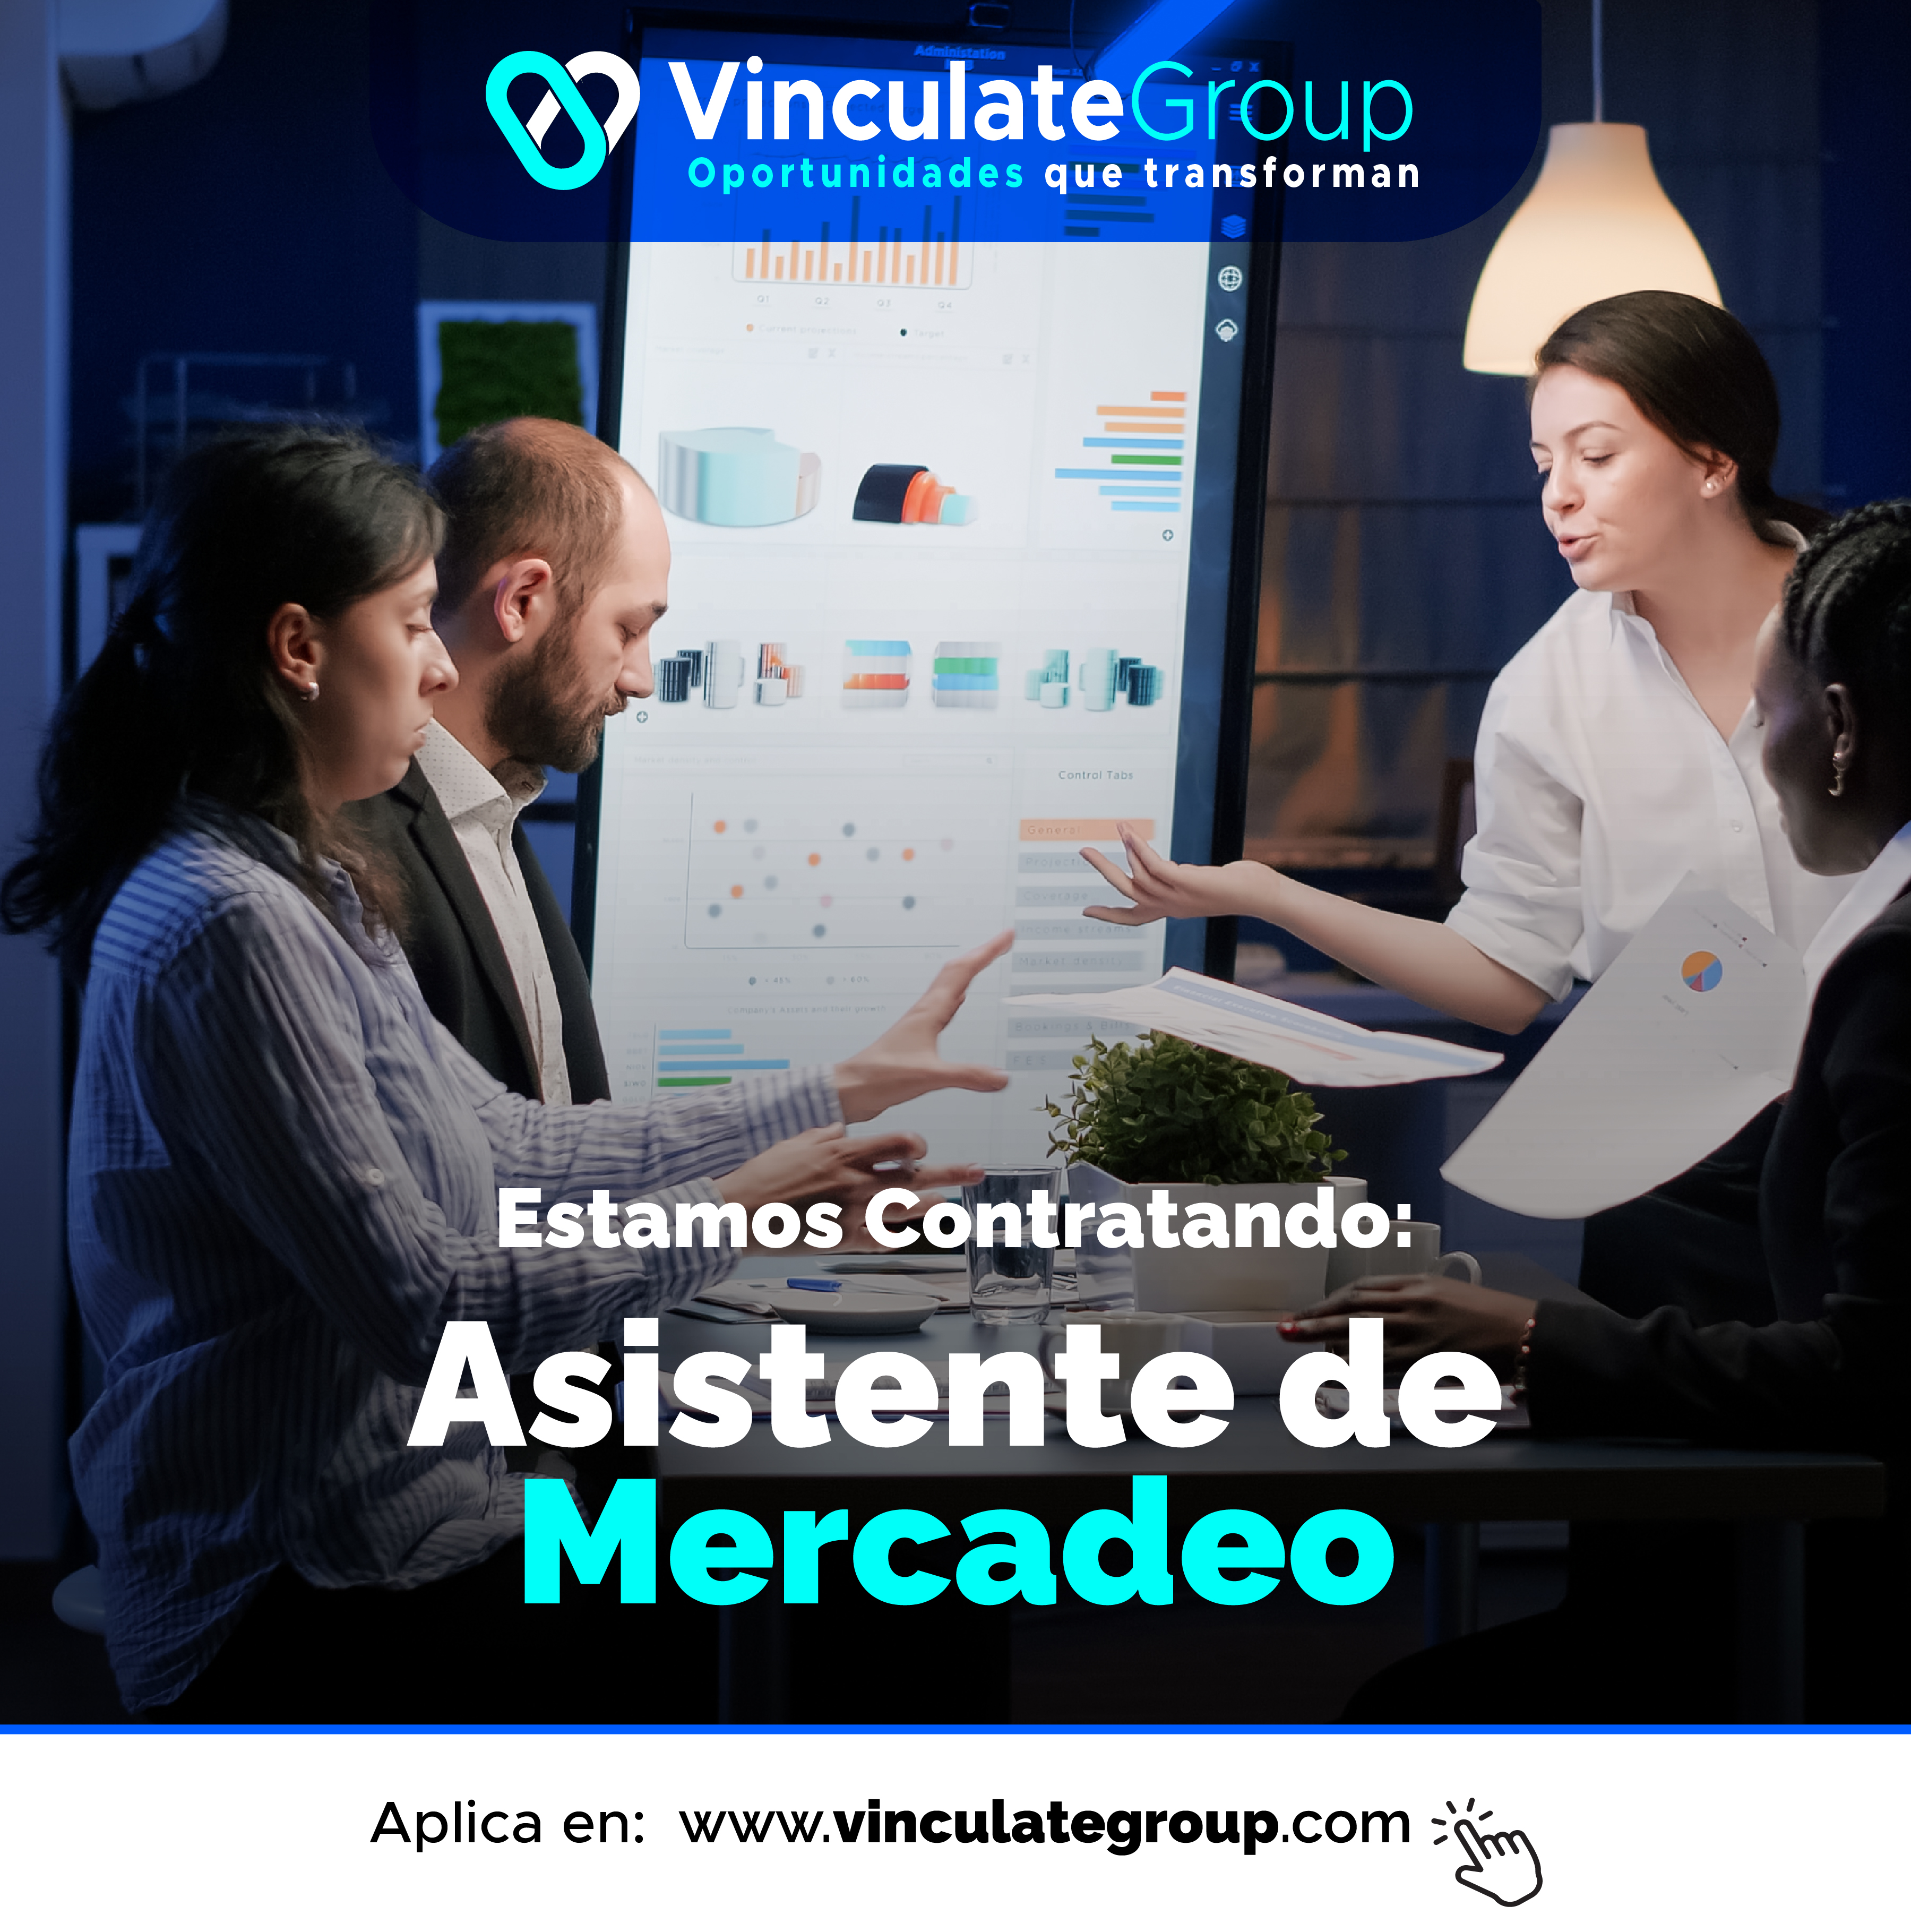 @) VinculateGroup

Oportunidades que transforman

    
         
   

&
@®

5 Ce L

pp = de
Mercadeo

 

Aplica en: www.vinculategroup.com ¥